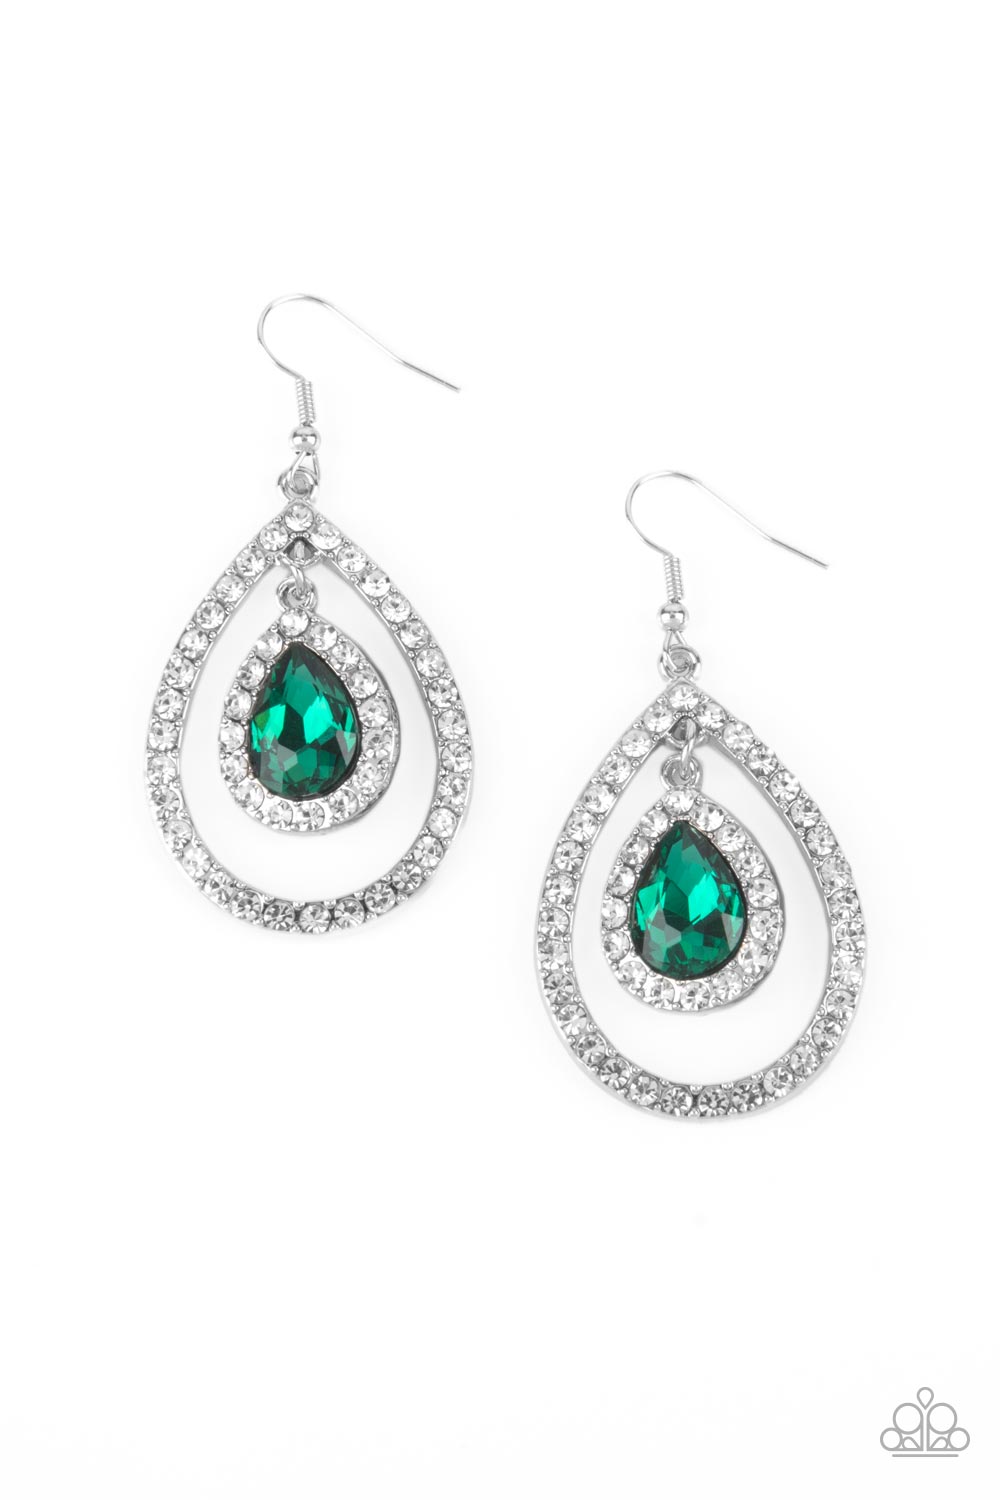 Blushing Bride - Green Teardrop Gem & White Rhinestone Paparazzi Earrings